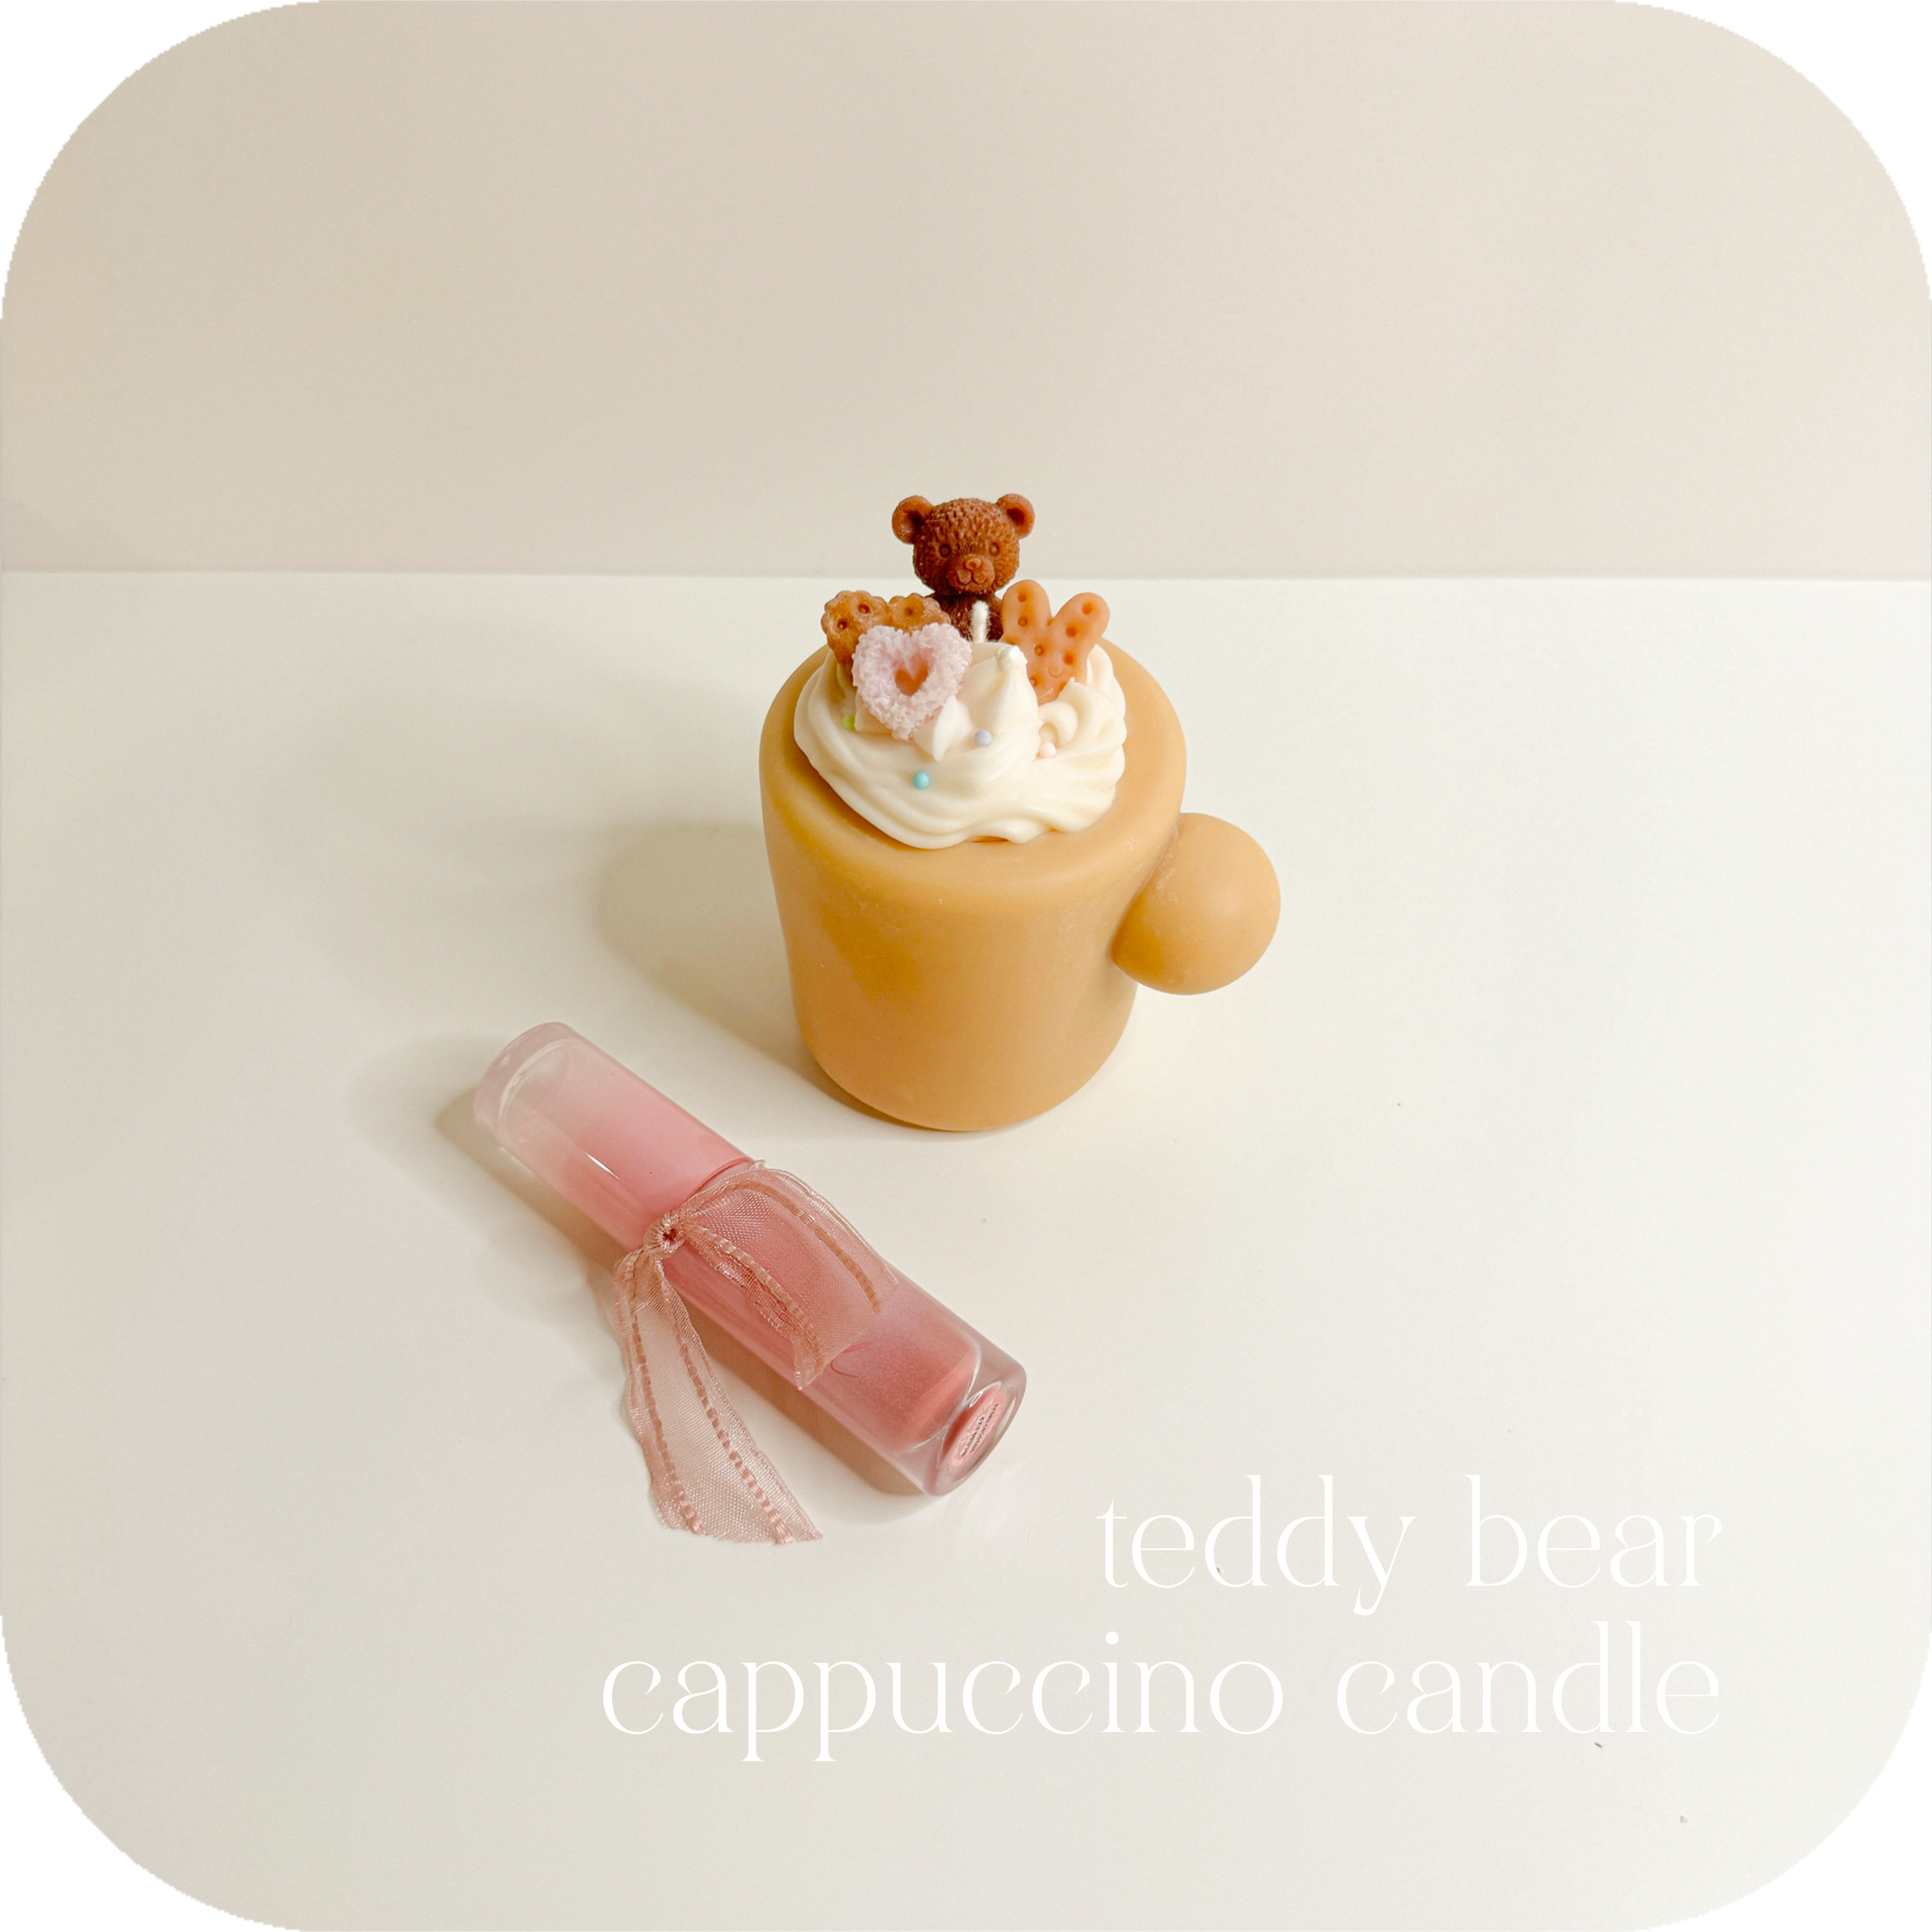 teddy bear cappuccino candle